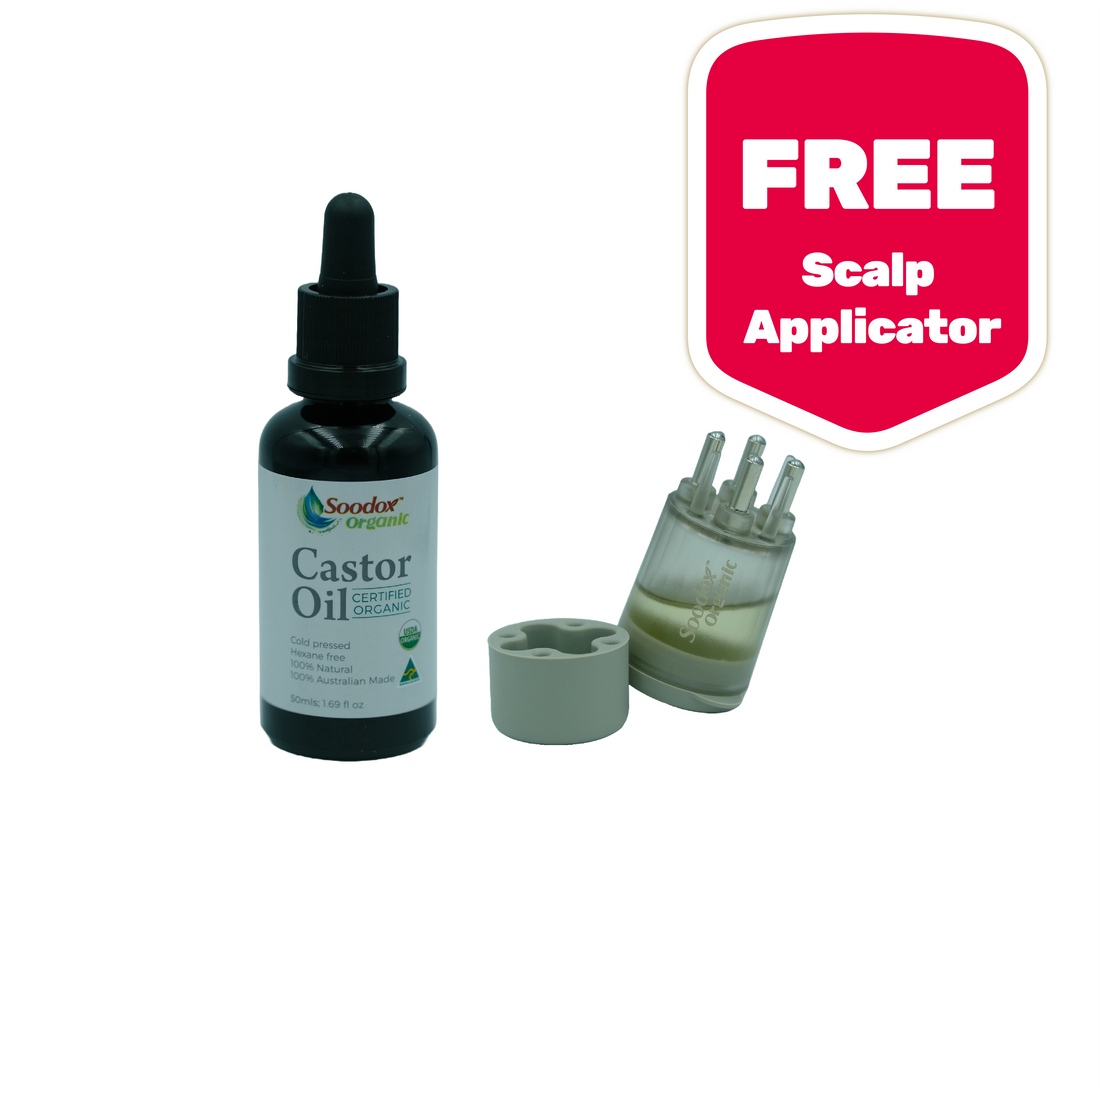 Soodox Organic Castor Oil 50mL + Free Castor Oil Applicator